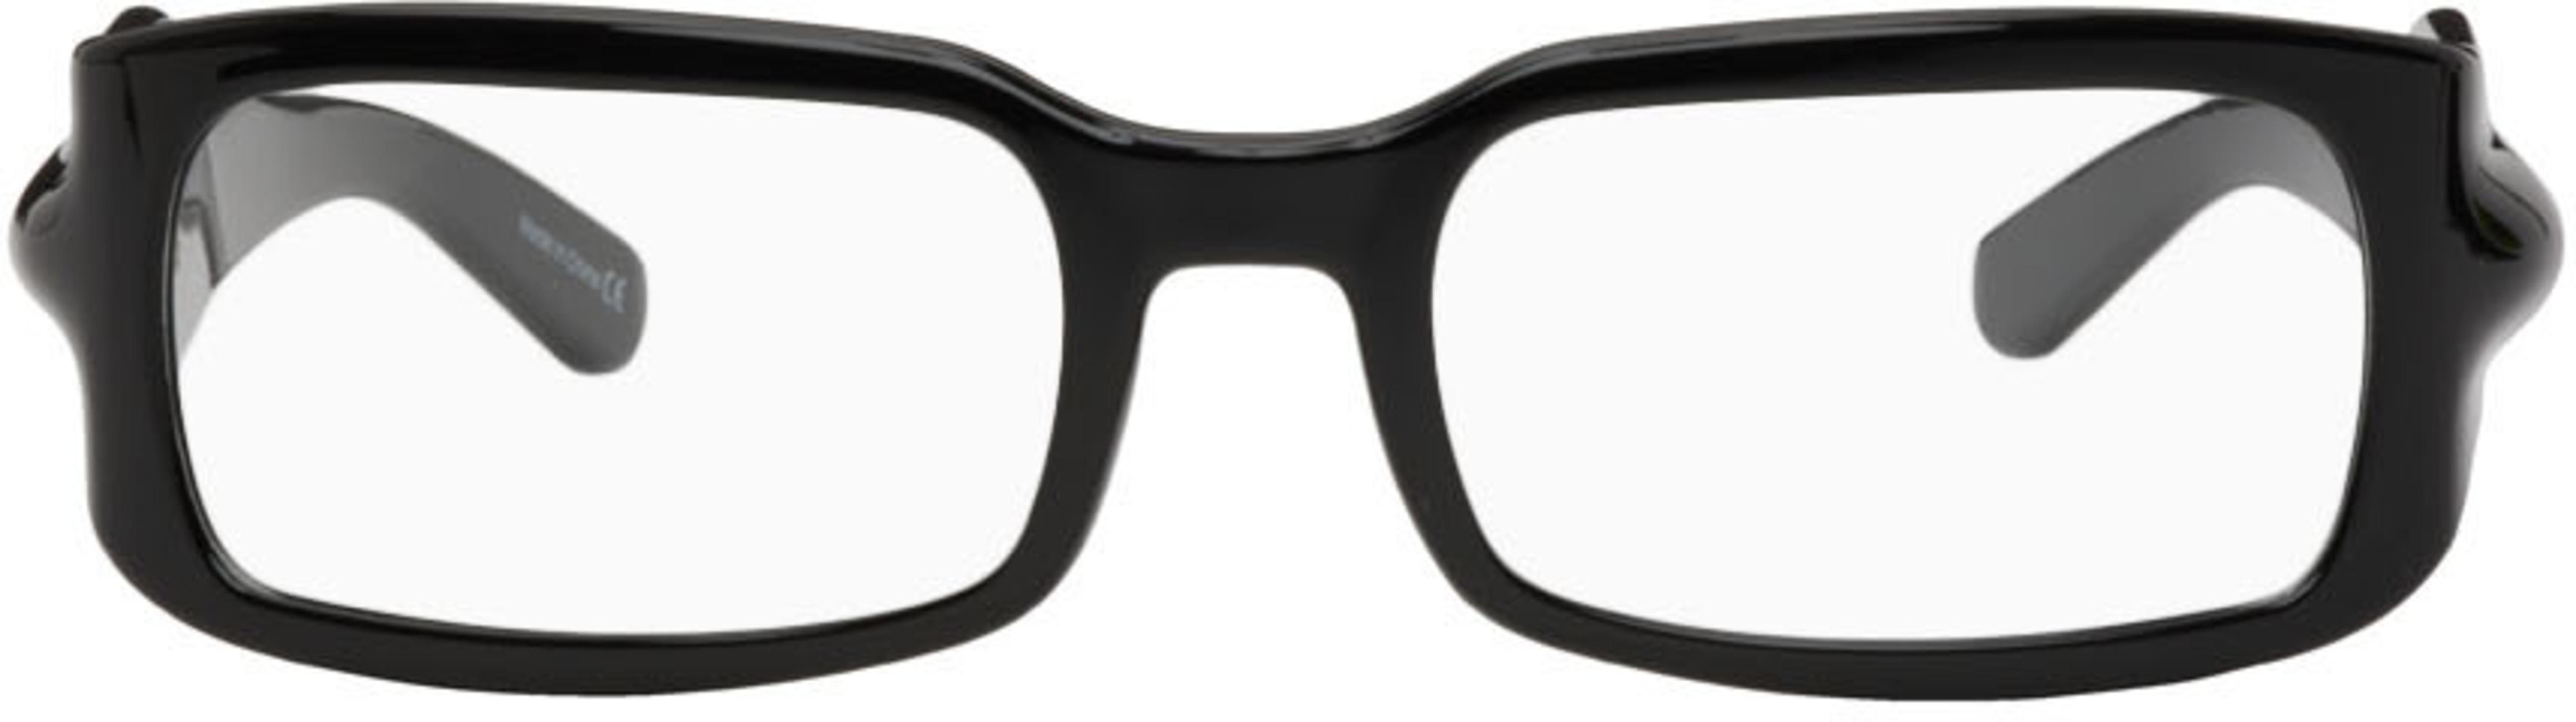 Black Gloop Glasses by A BETTER FEELING